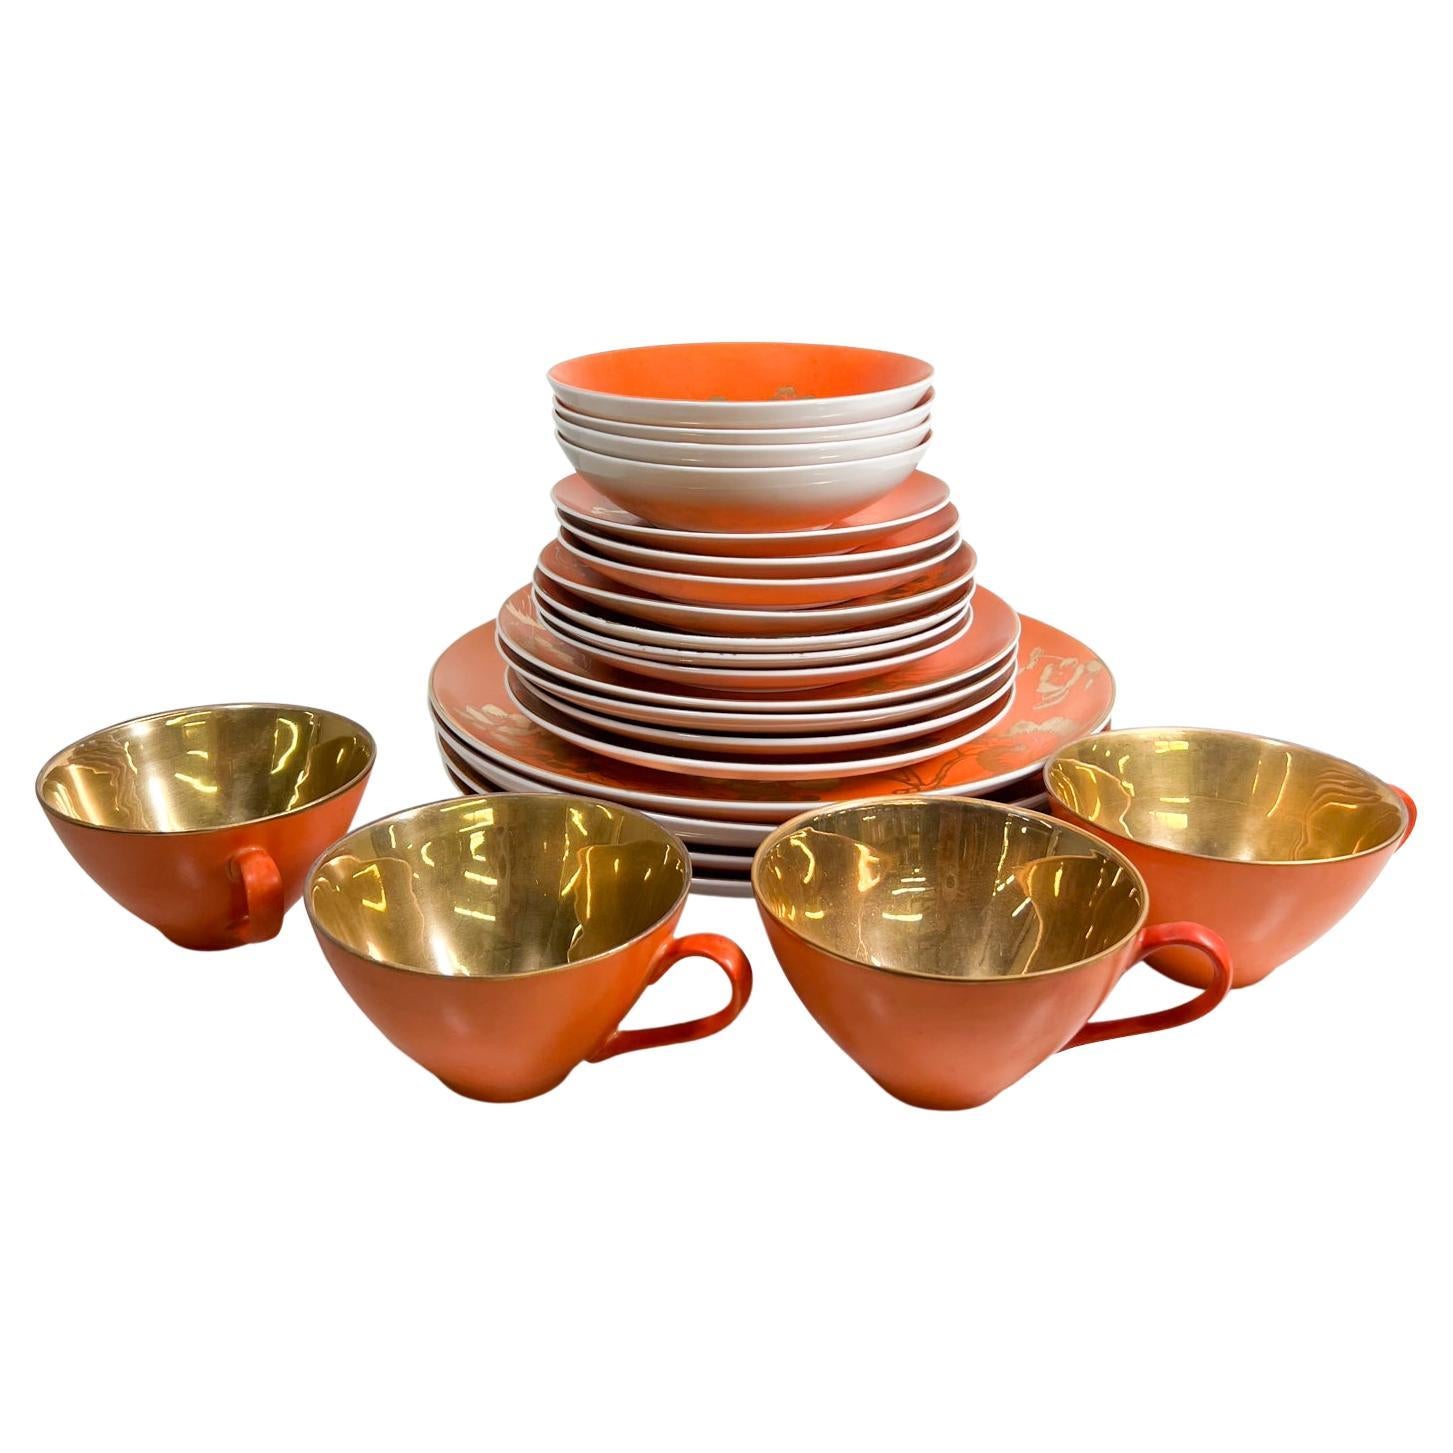 1960s Dorothy C. Thorpe California Persimmon Orange & Gold Dinnerware Set Four